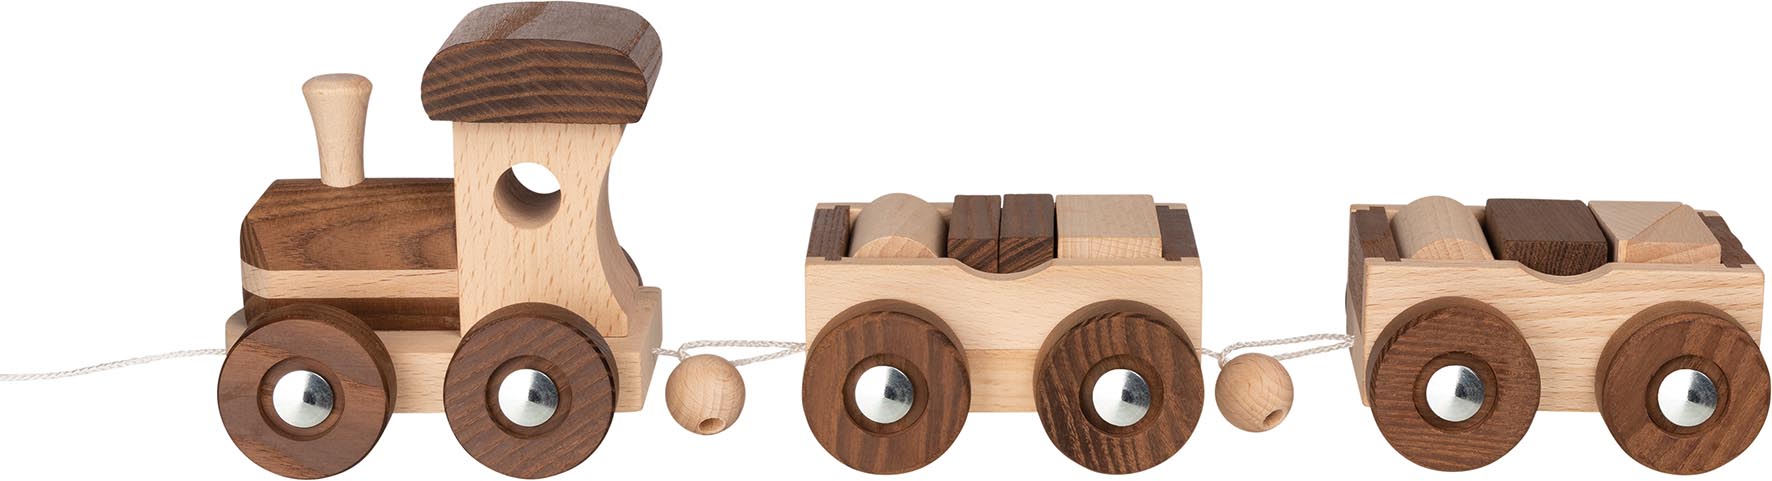 Zug Amsterdam Holzzug Eisenbahn Holzeisenbahn Holzspielzeug Spielzeug